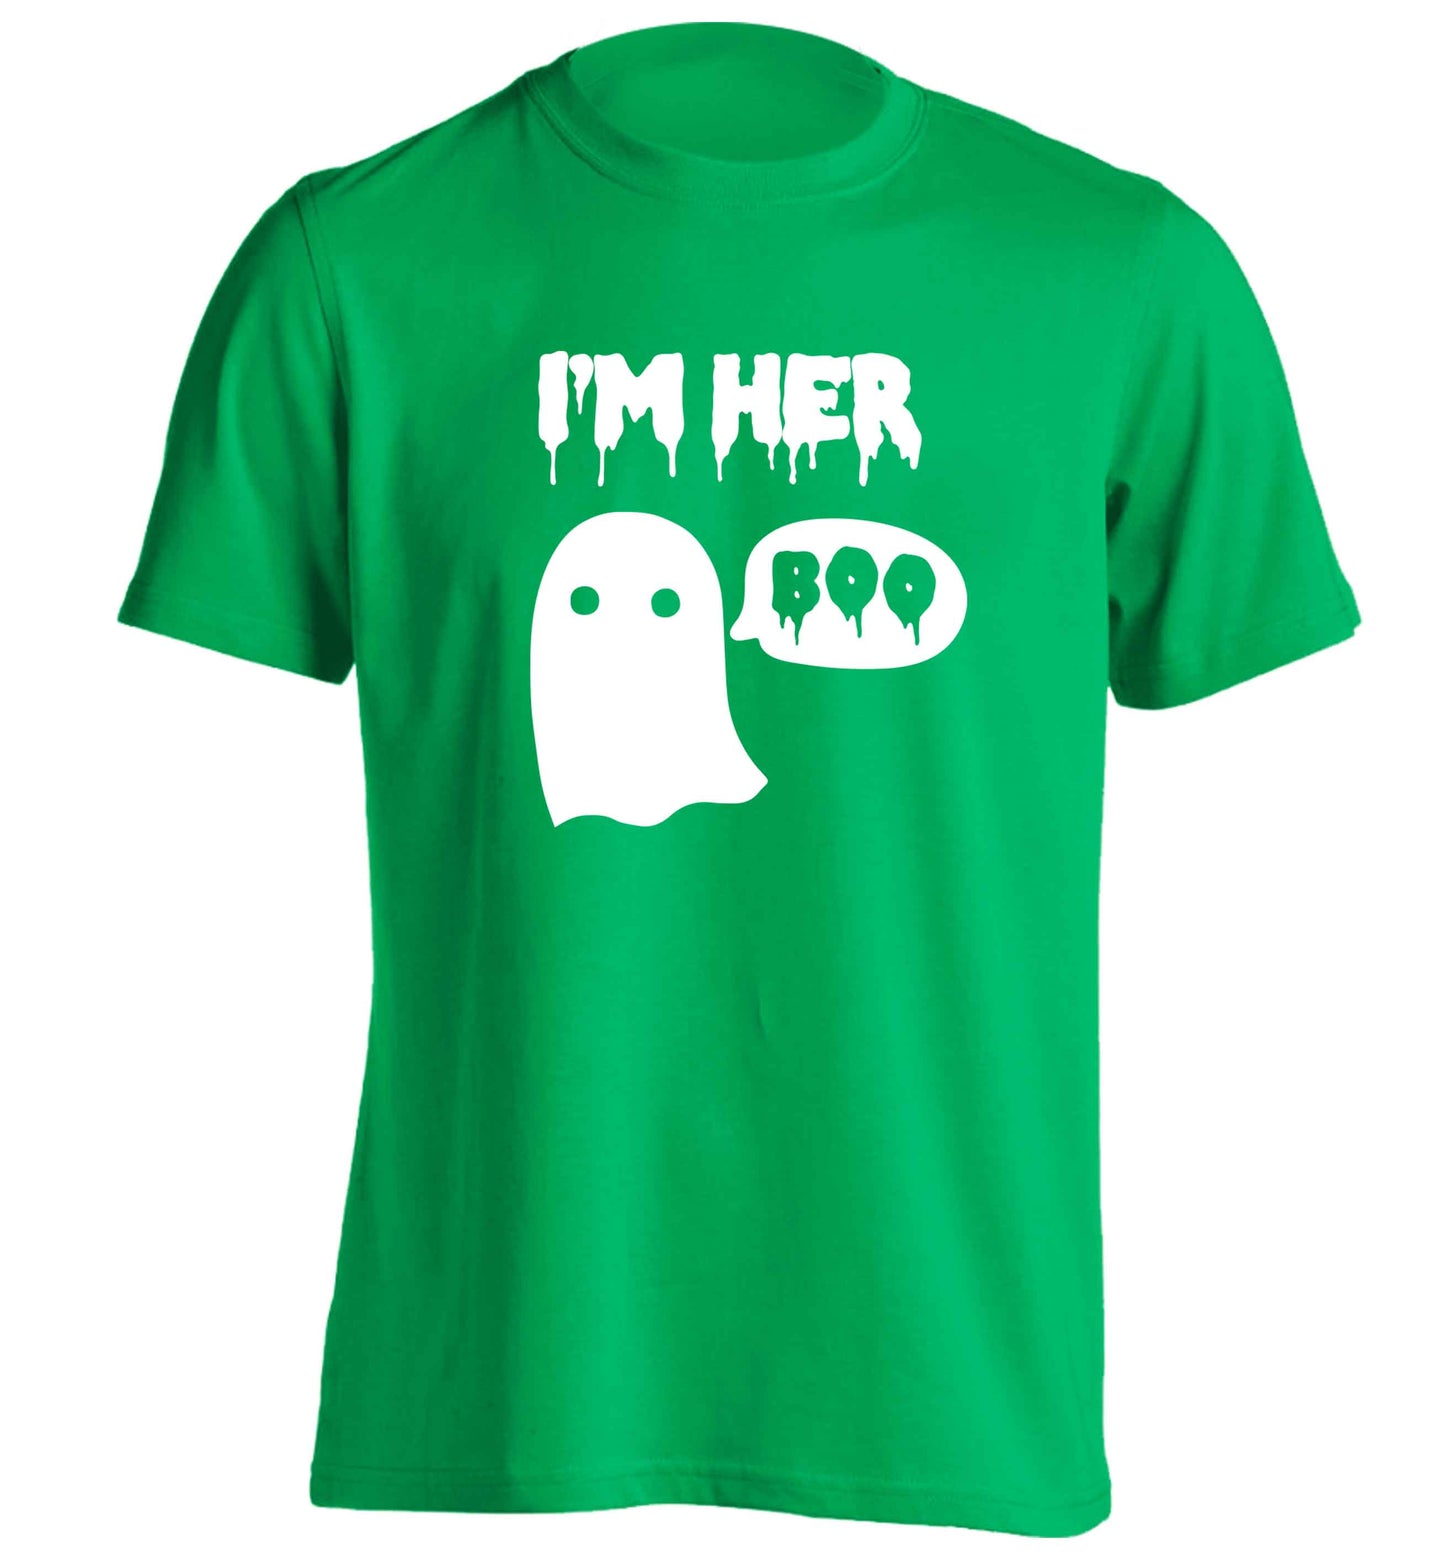 I'm her boo adults unisex green Tshirt 2XL